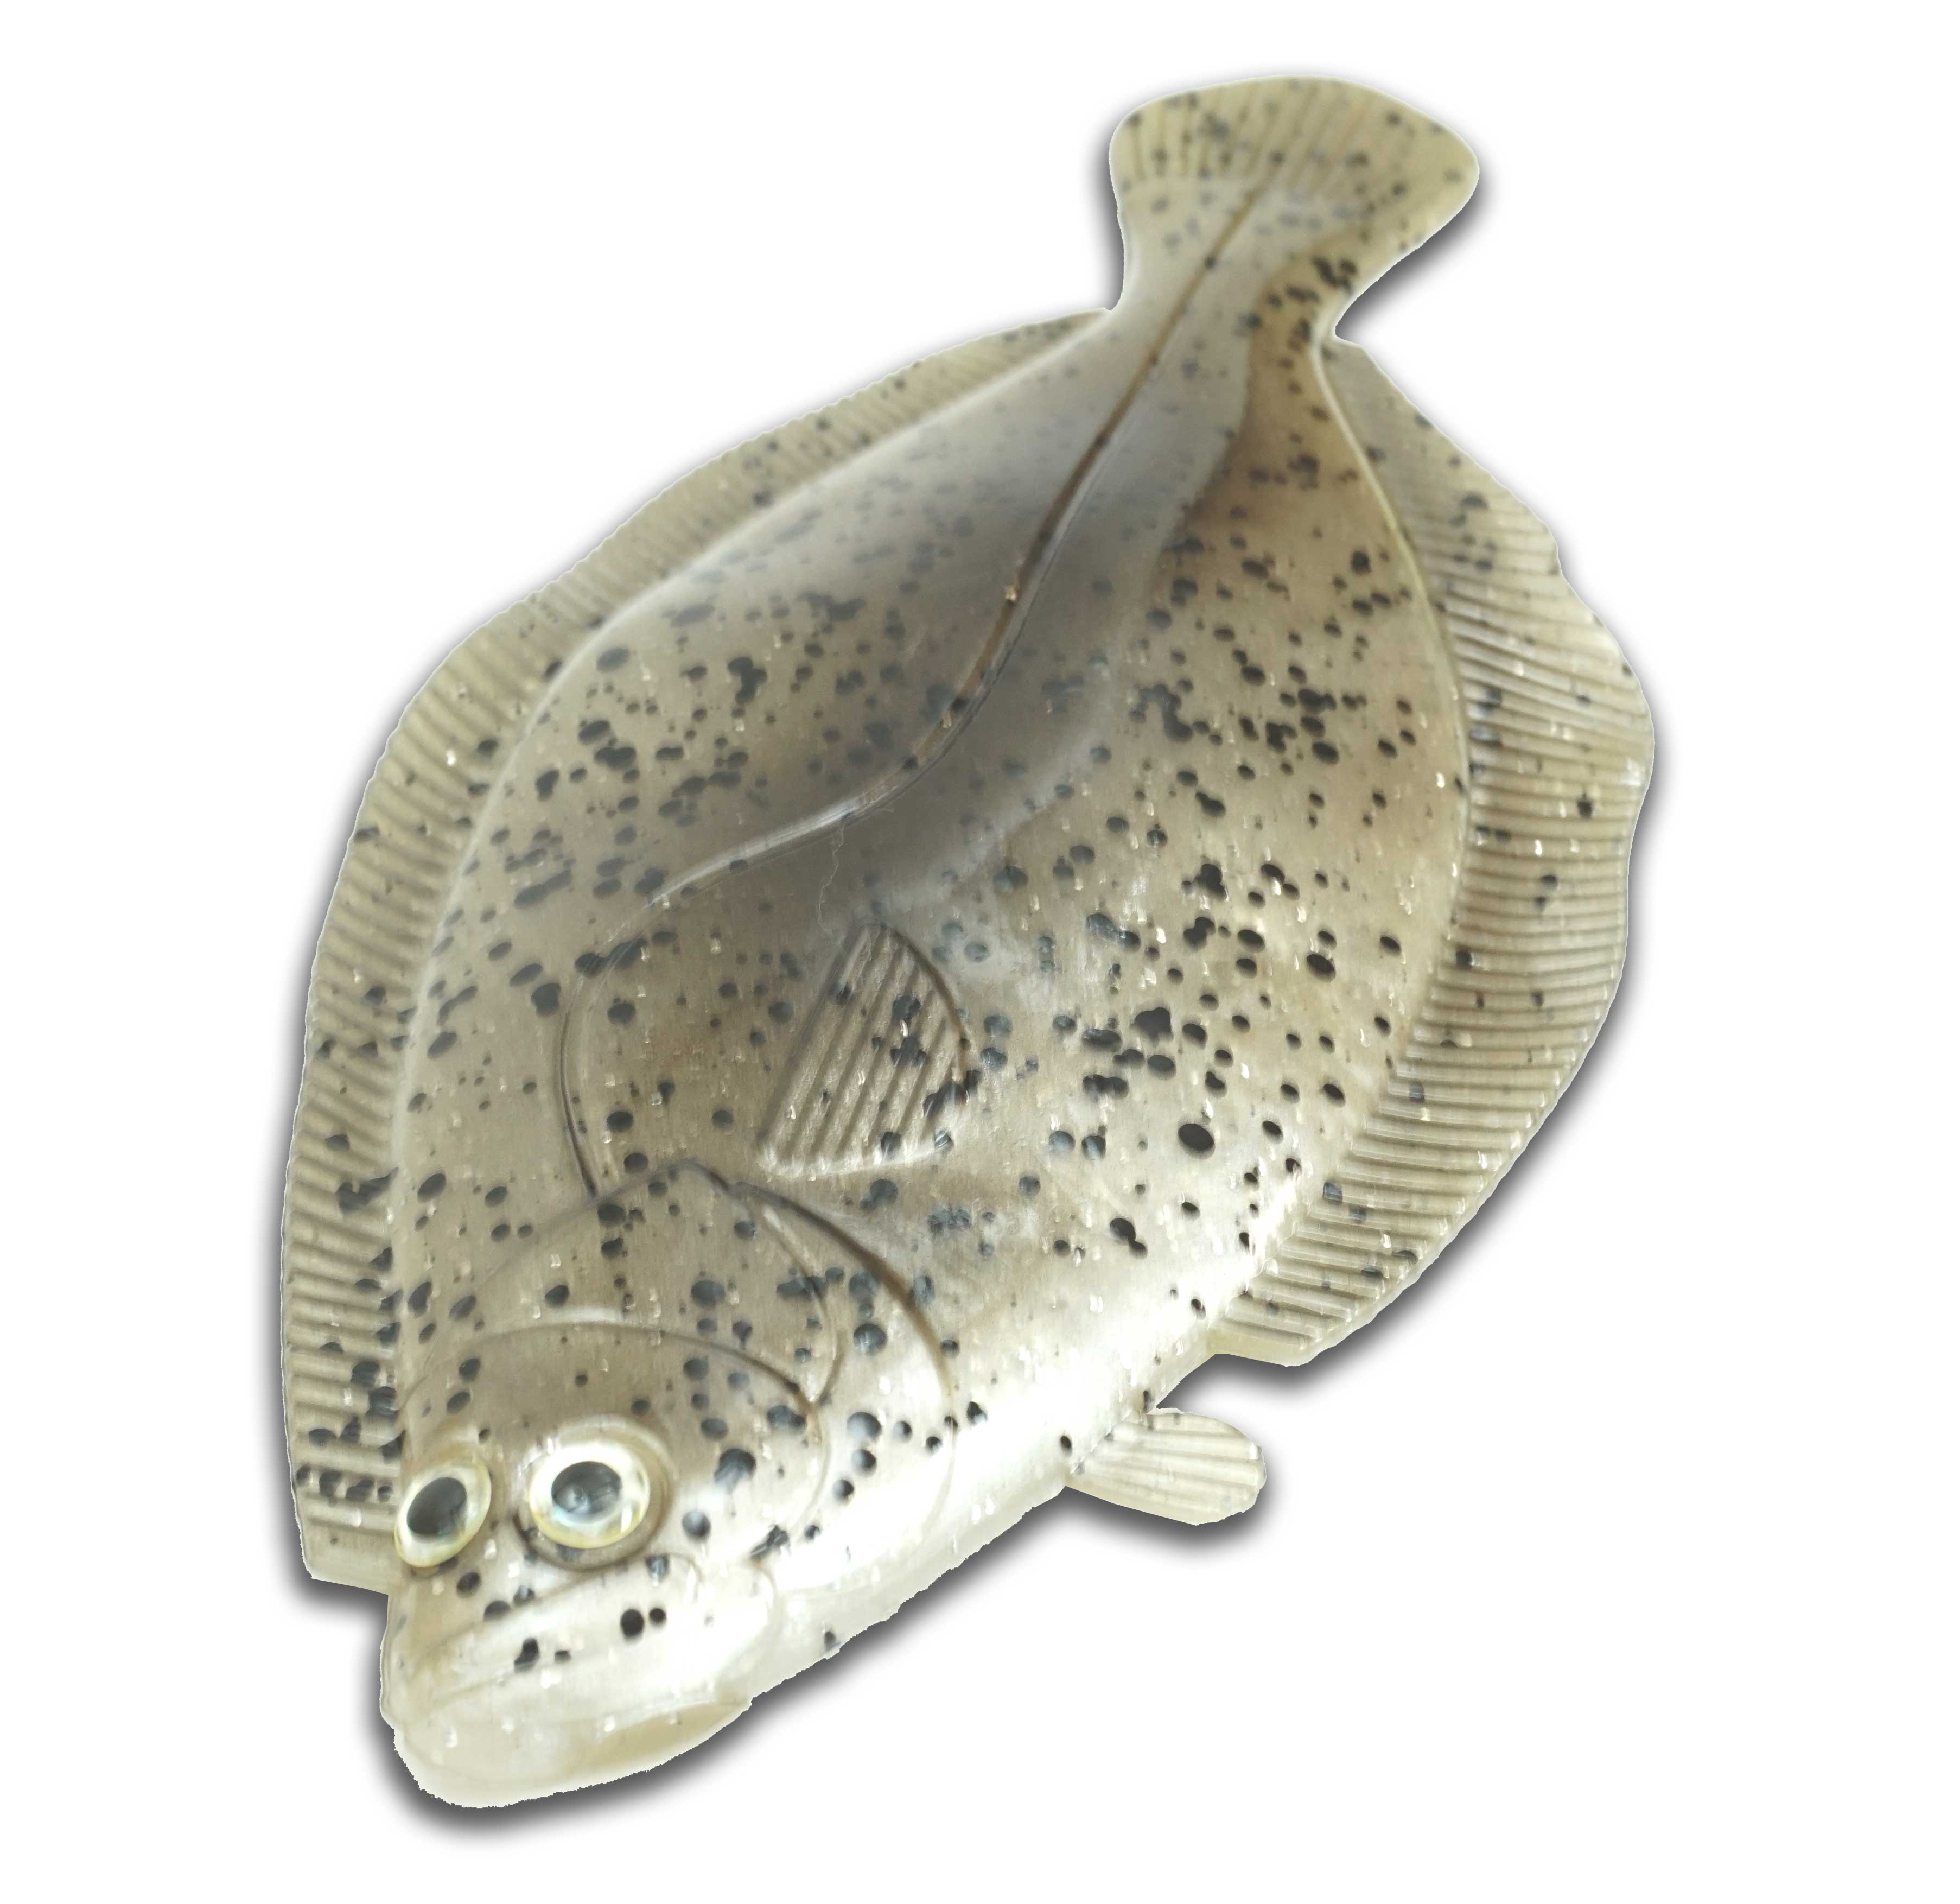 Artificial Flounder 8" Light Tan/Speckled - Almost Alive Lures